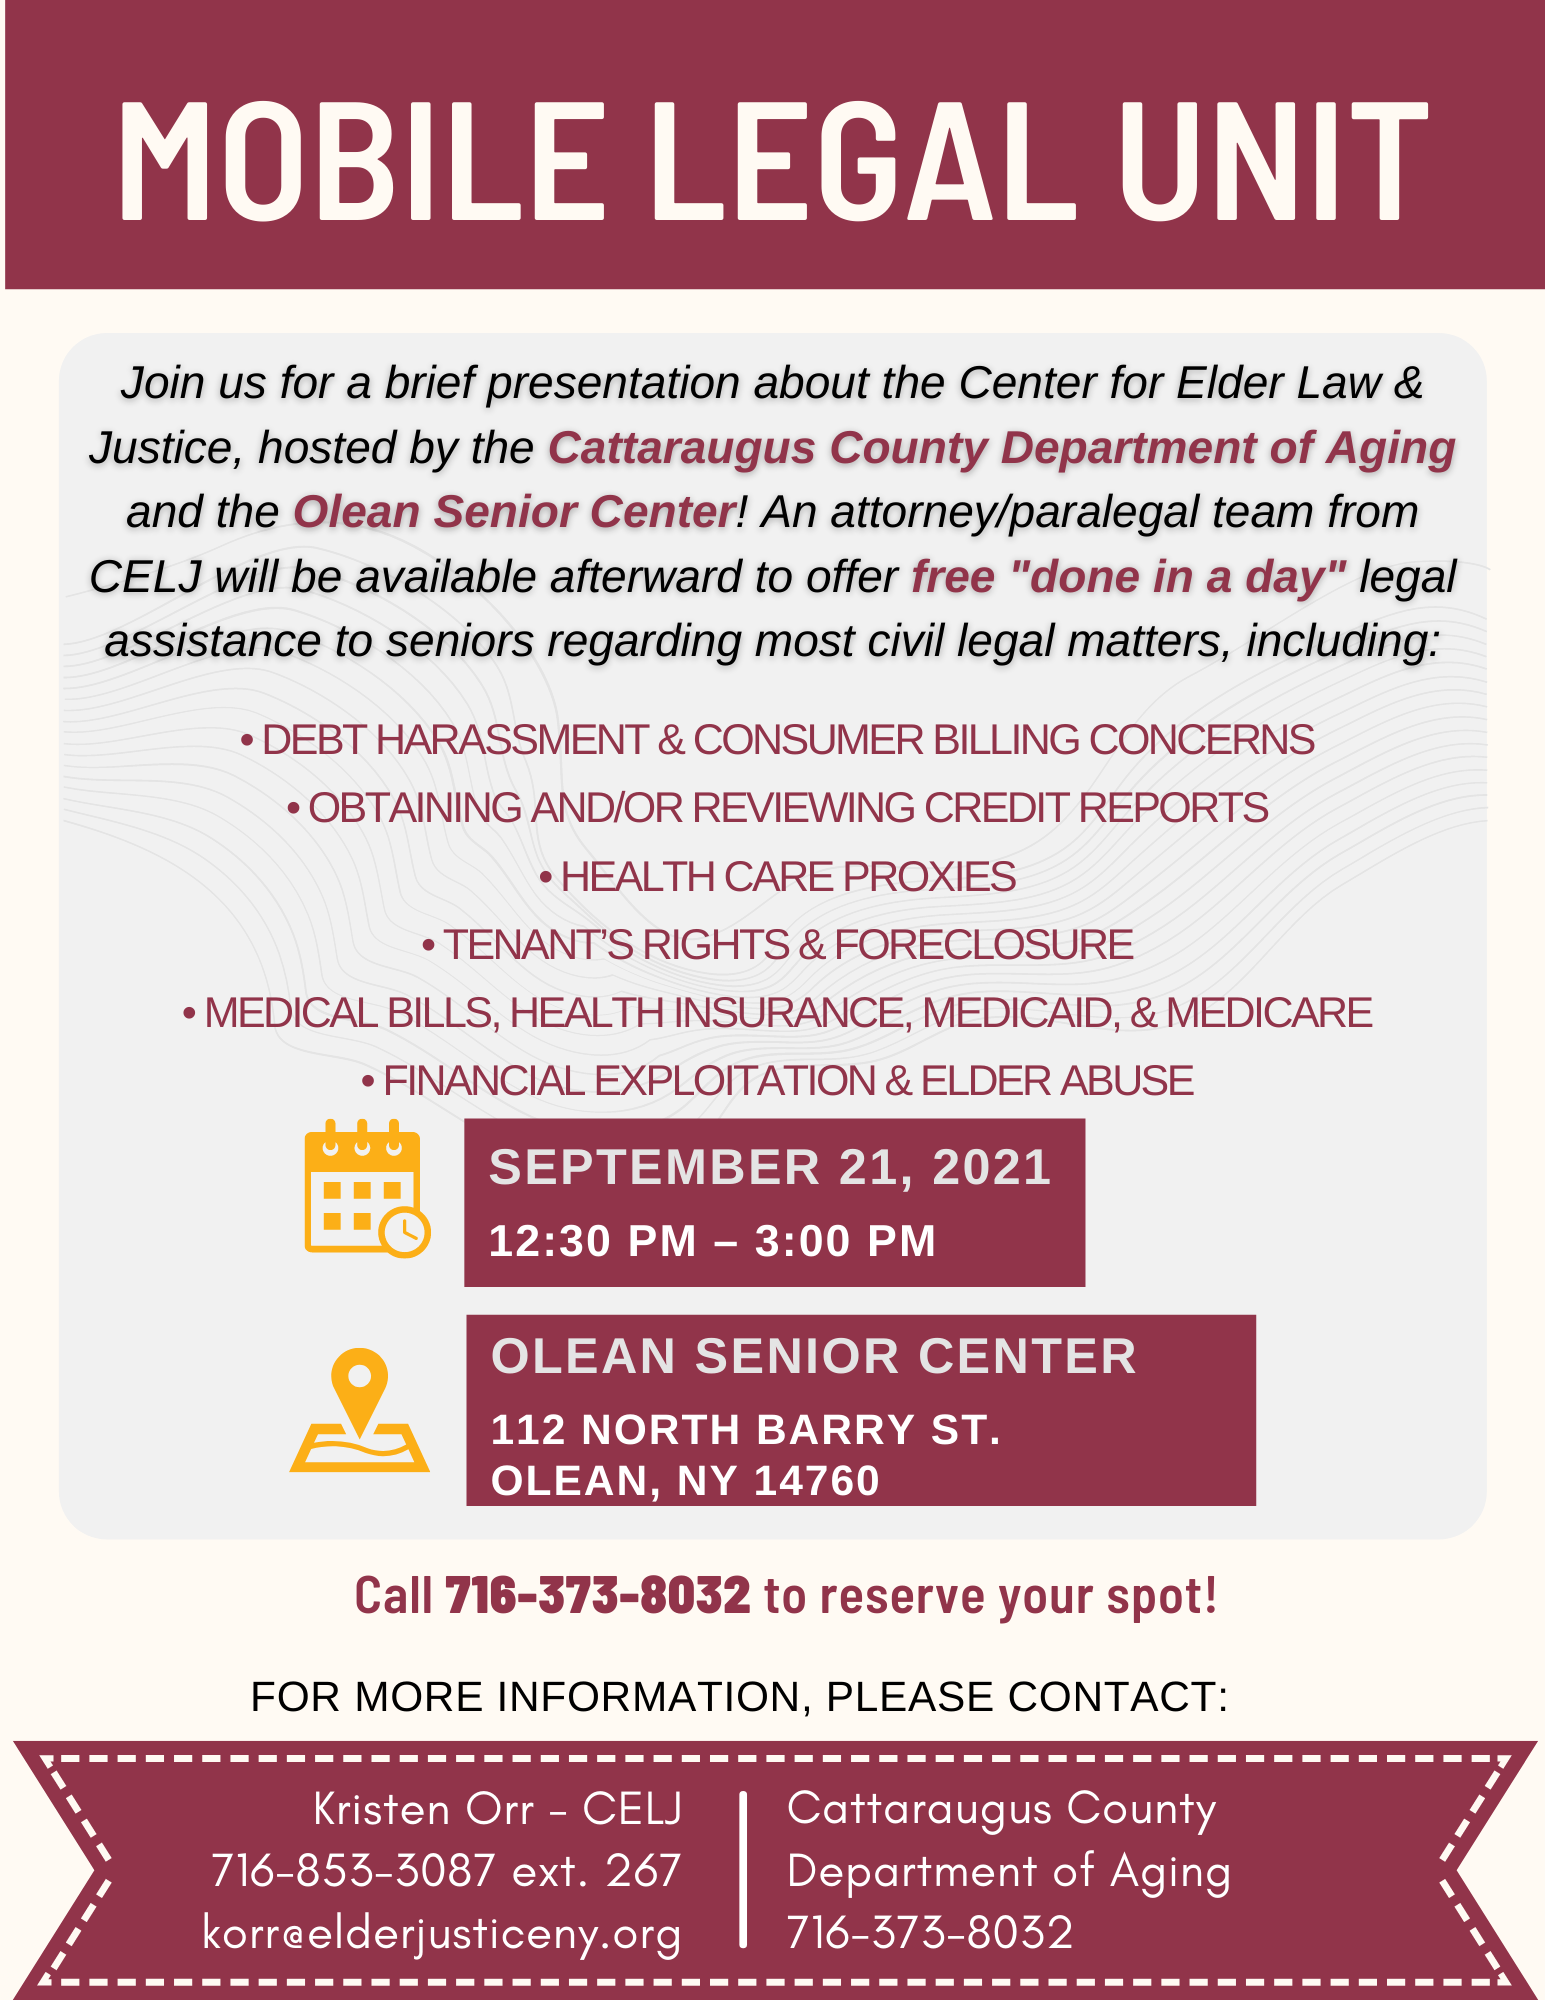 Flyer for the Mobile Legal Unit event on Sept. 21, 2021 at the Olean Senior Center